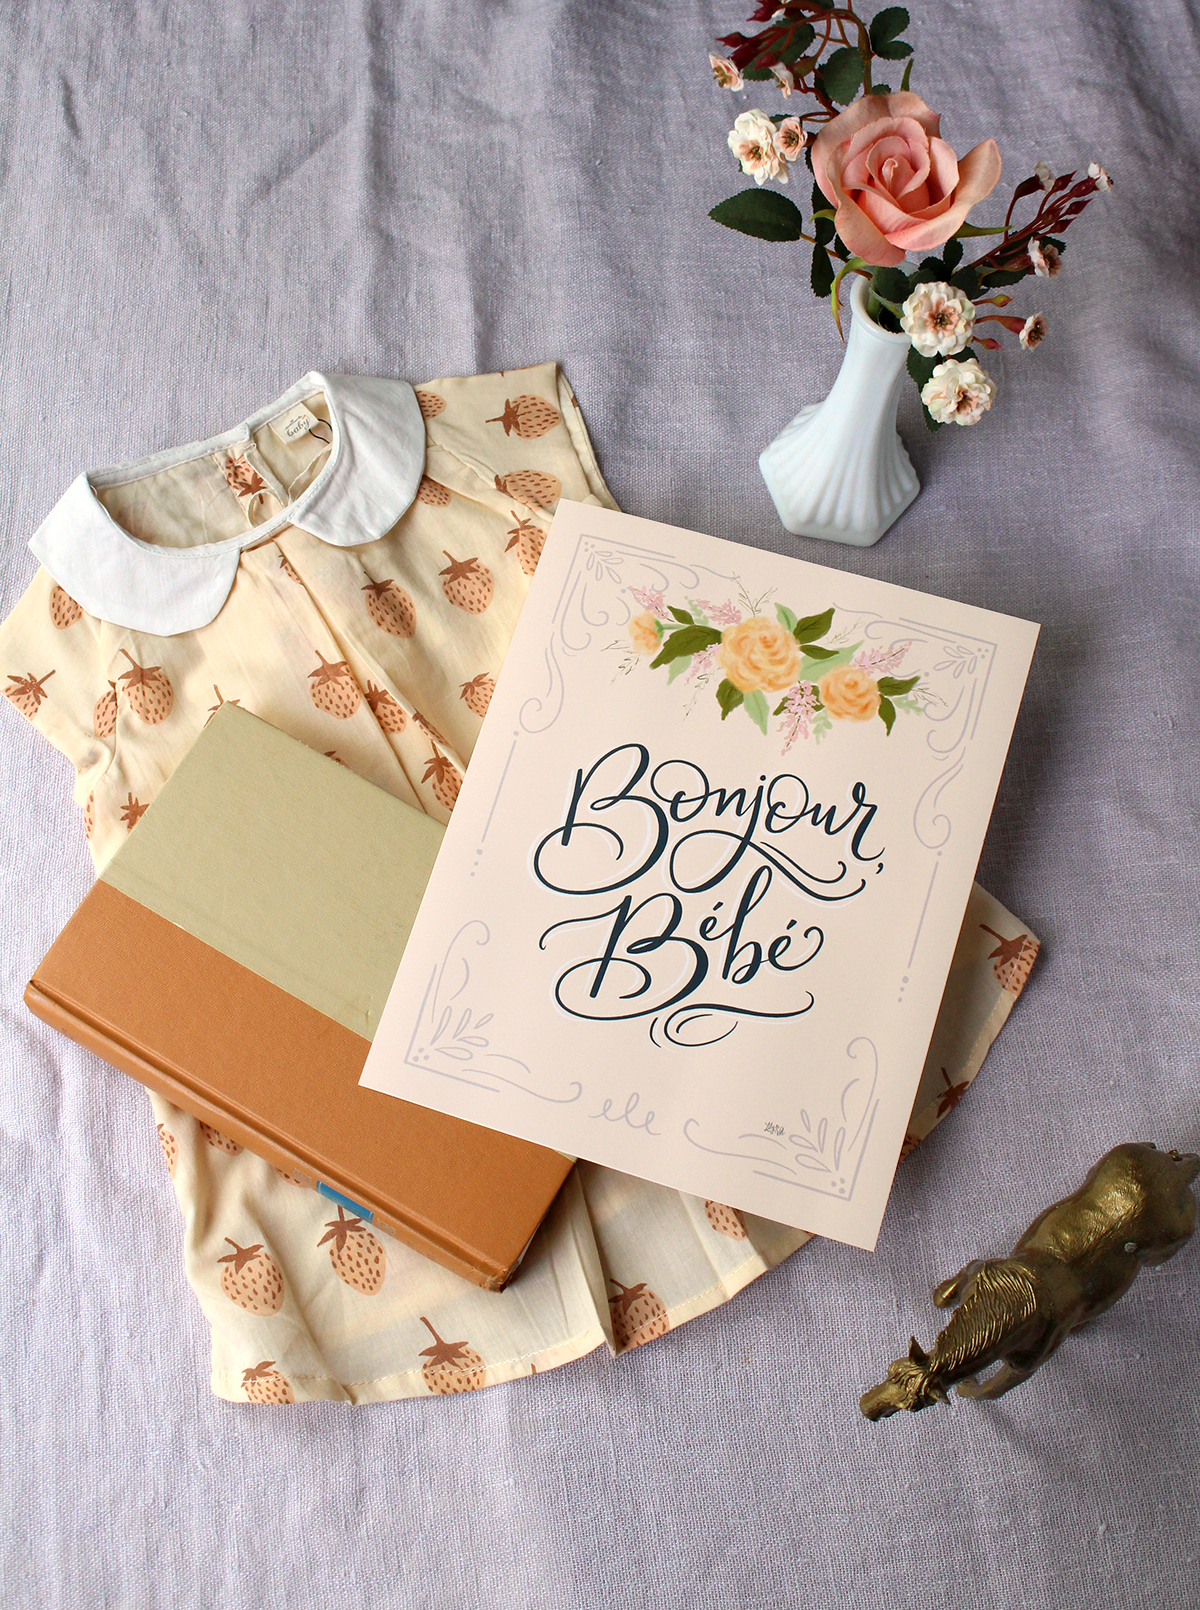 Bonjour Bebe - Parisian inspired Nursery Art Decor - Parisian Nursery Print